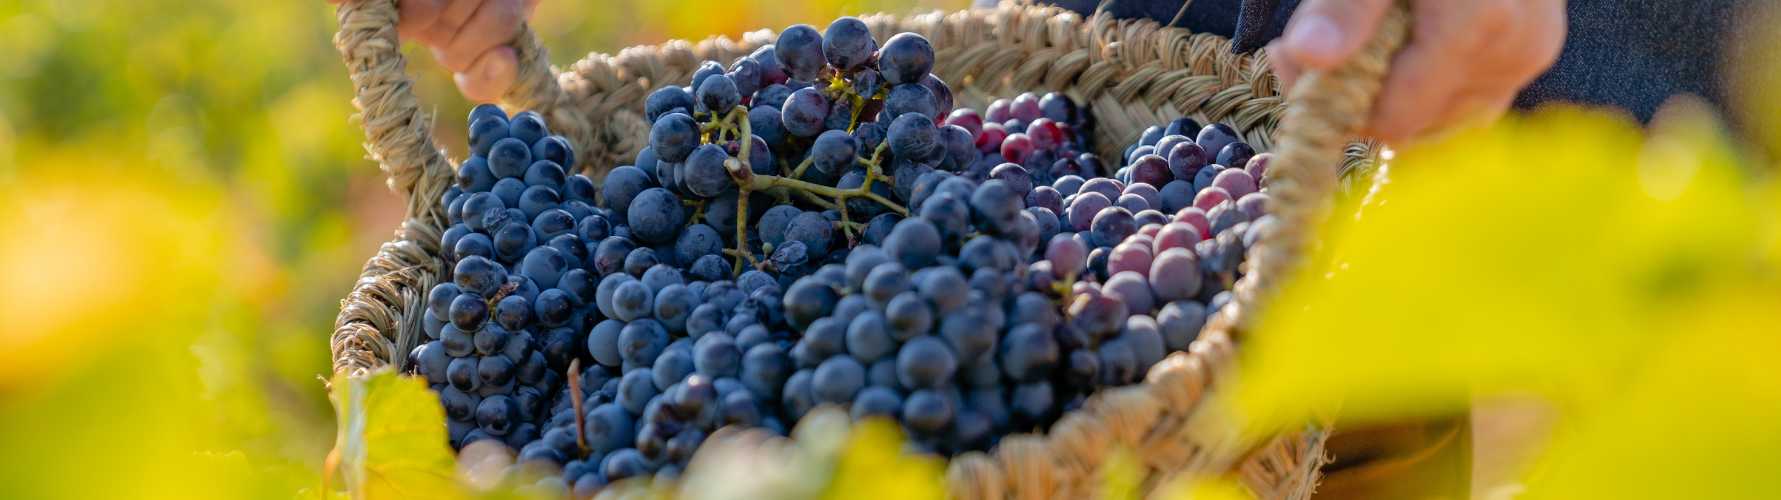 wine tourism in the region of valencia